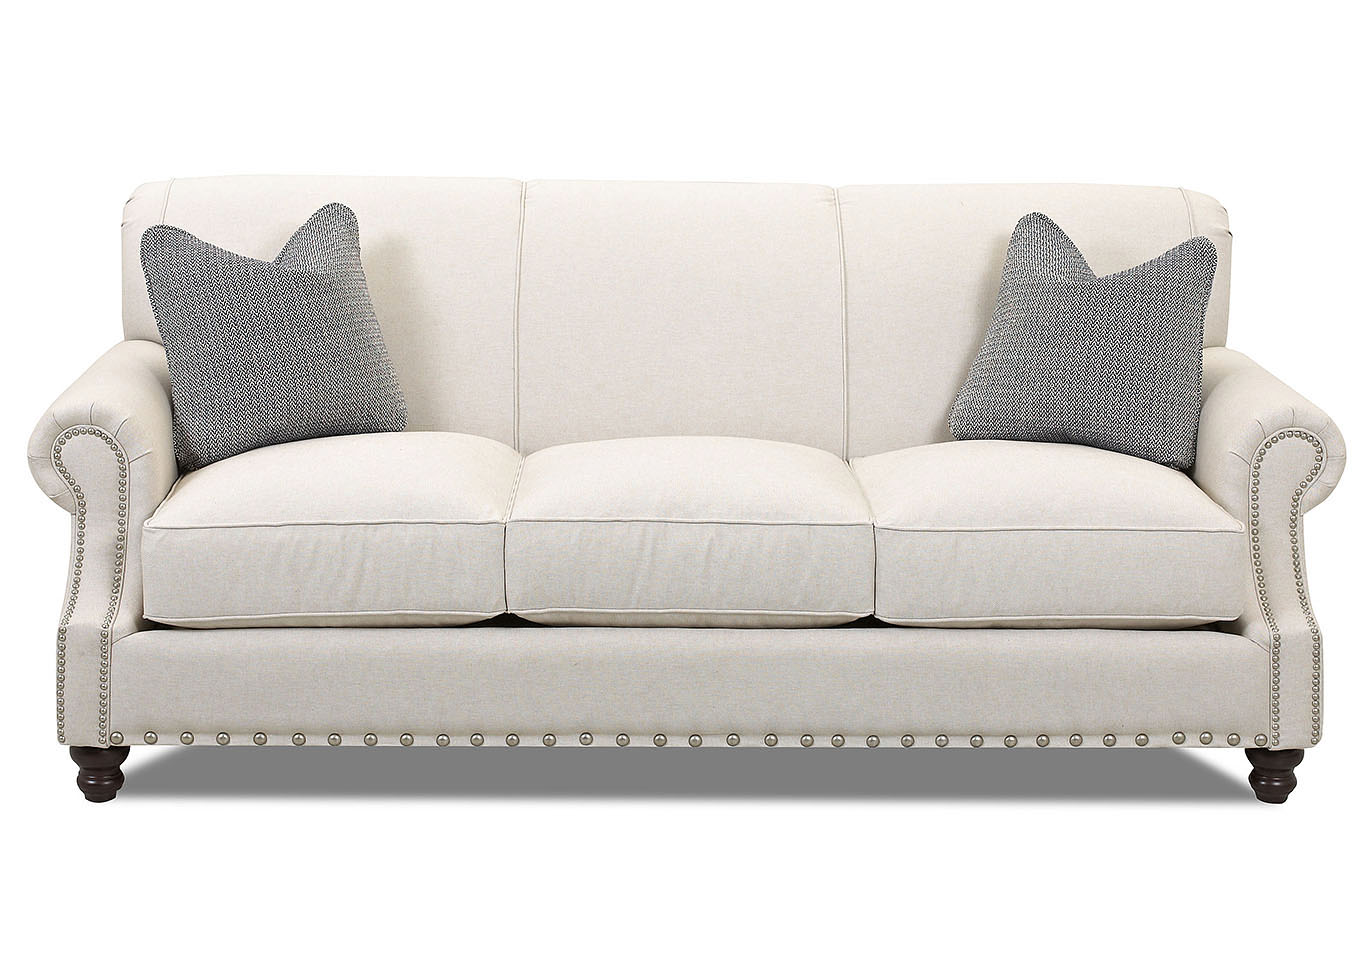 Fremont Durham Beige Stationary Fabric Sofa,Klaussner Home Furnishings